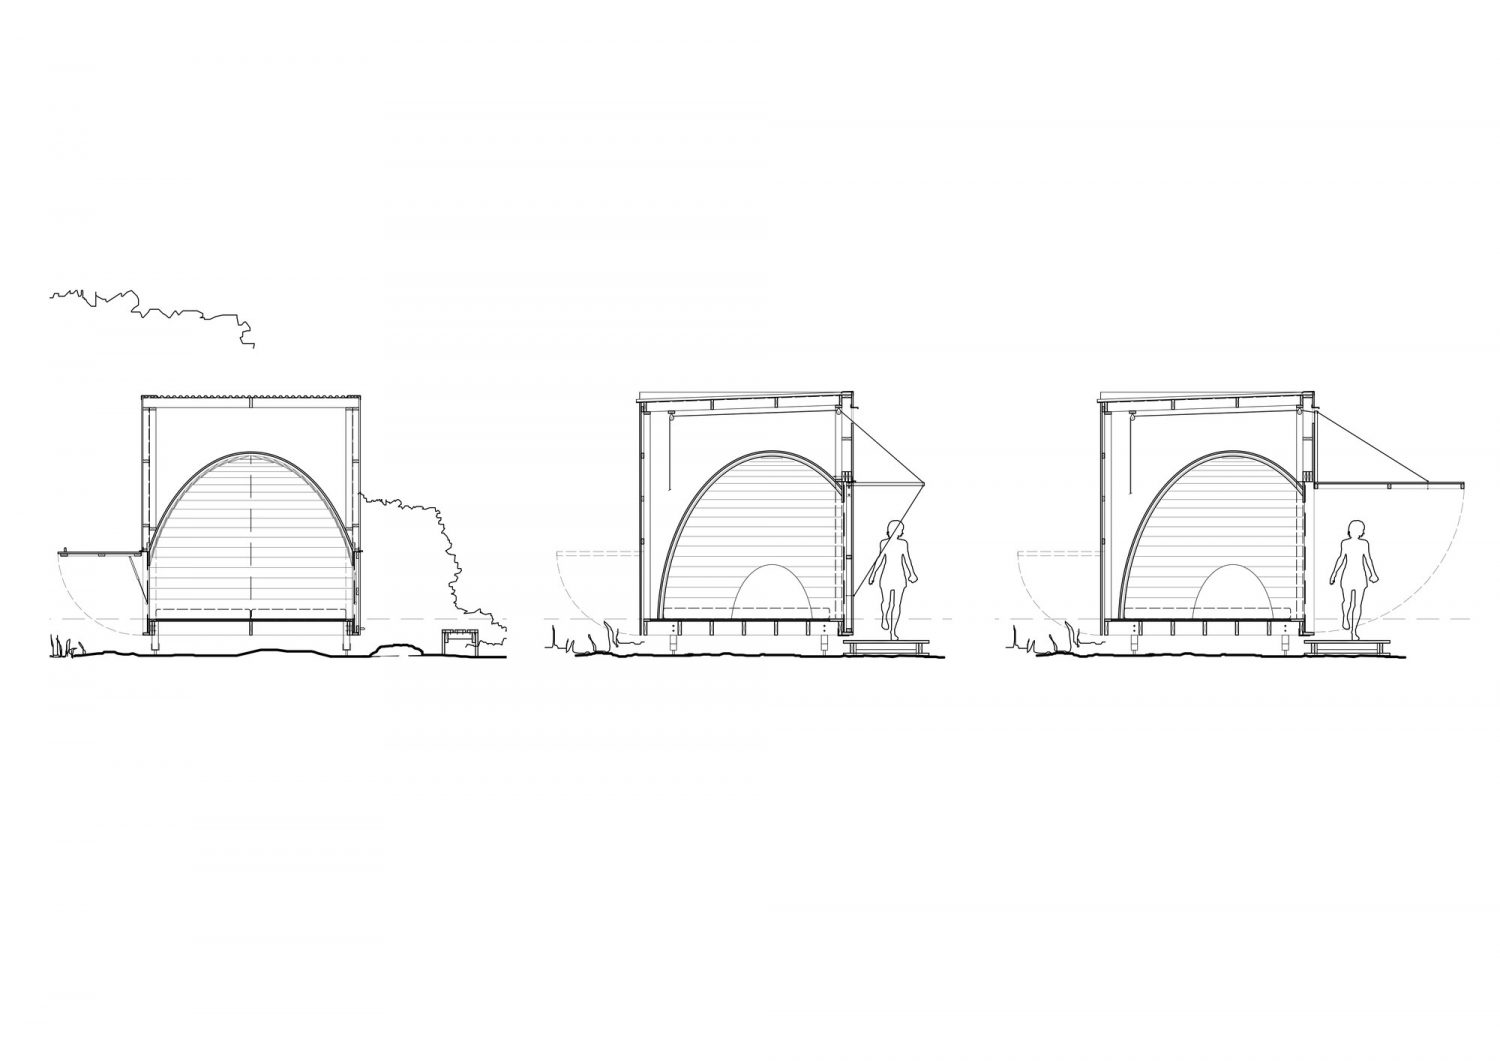 Krakani Lumi by Taylor and Hinds Architects